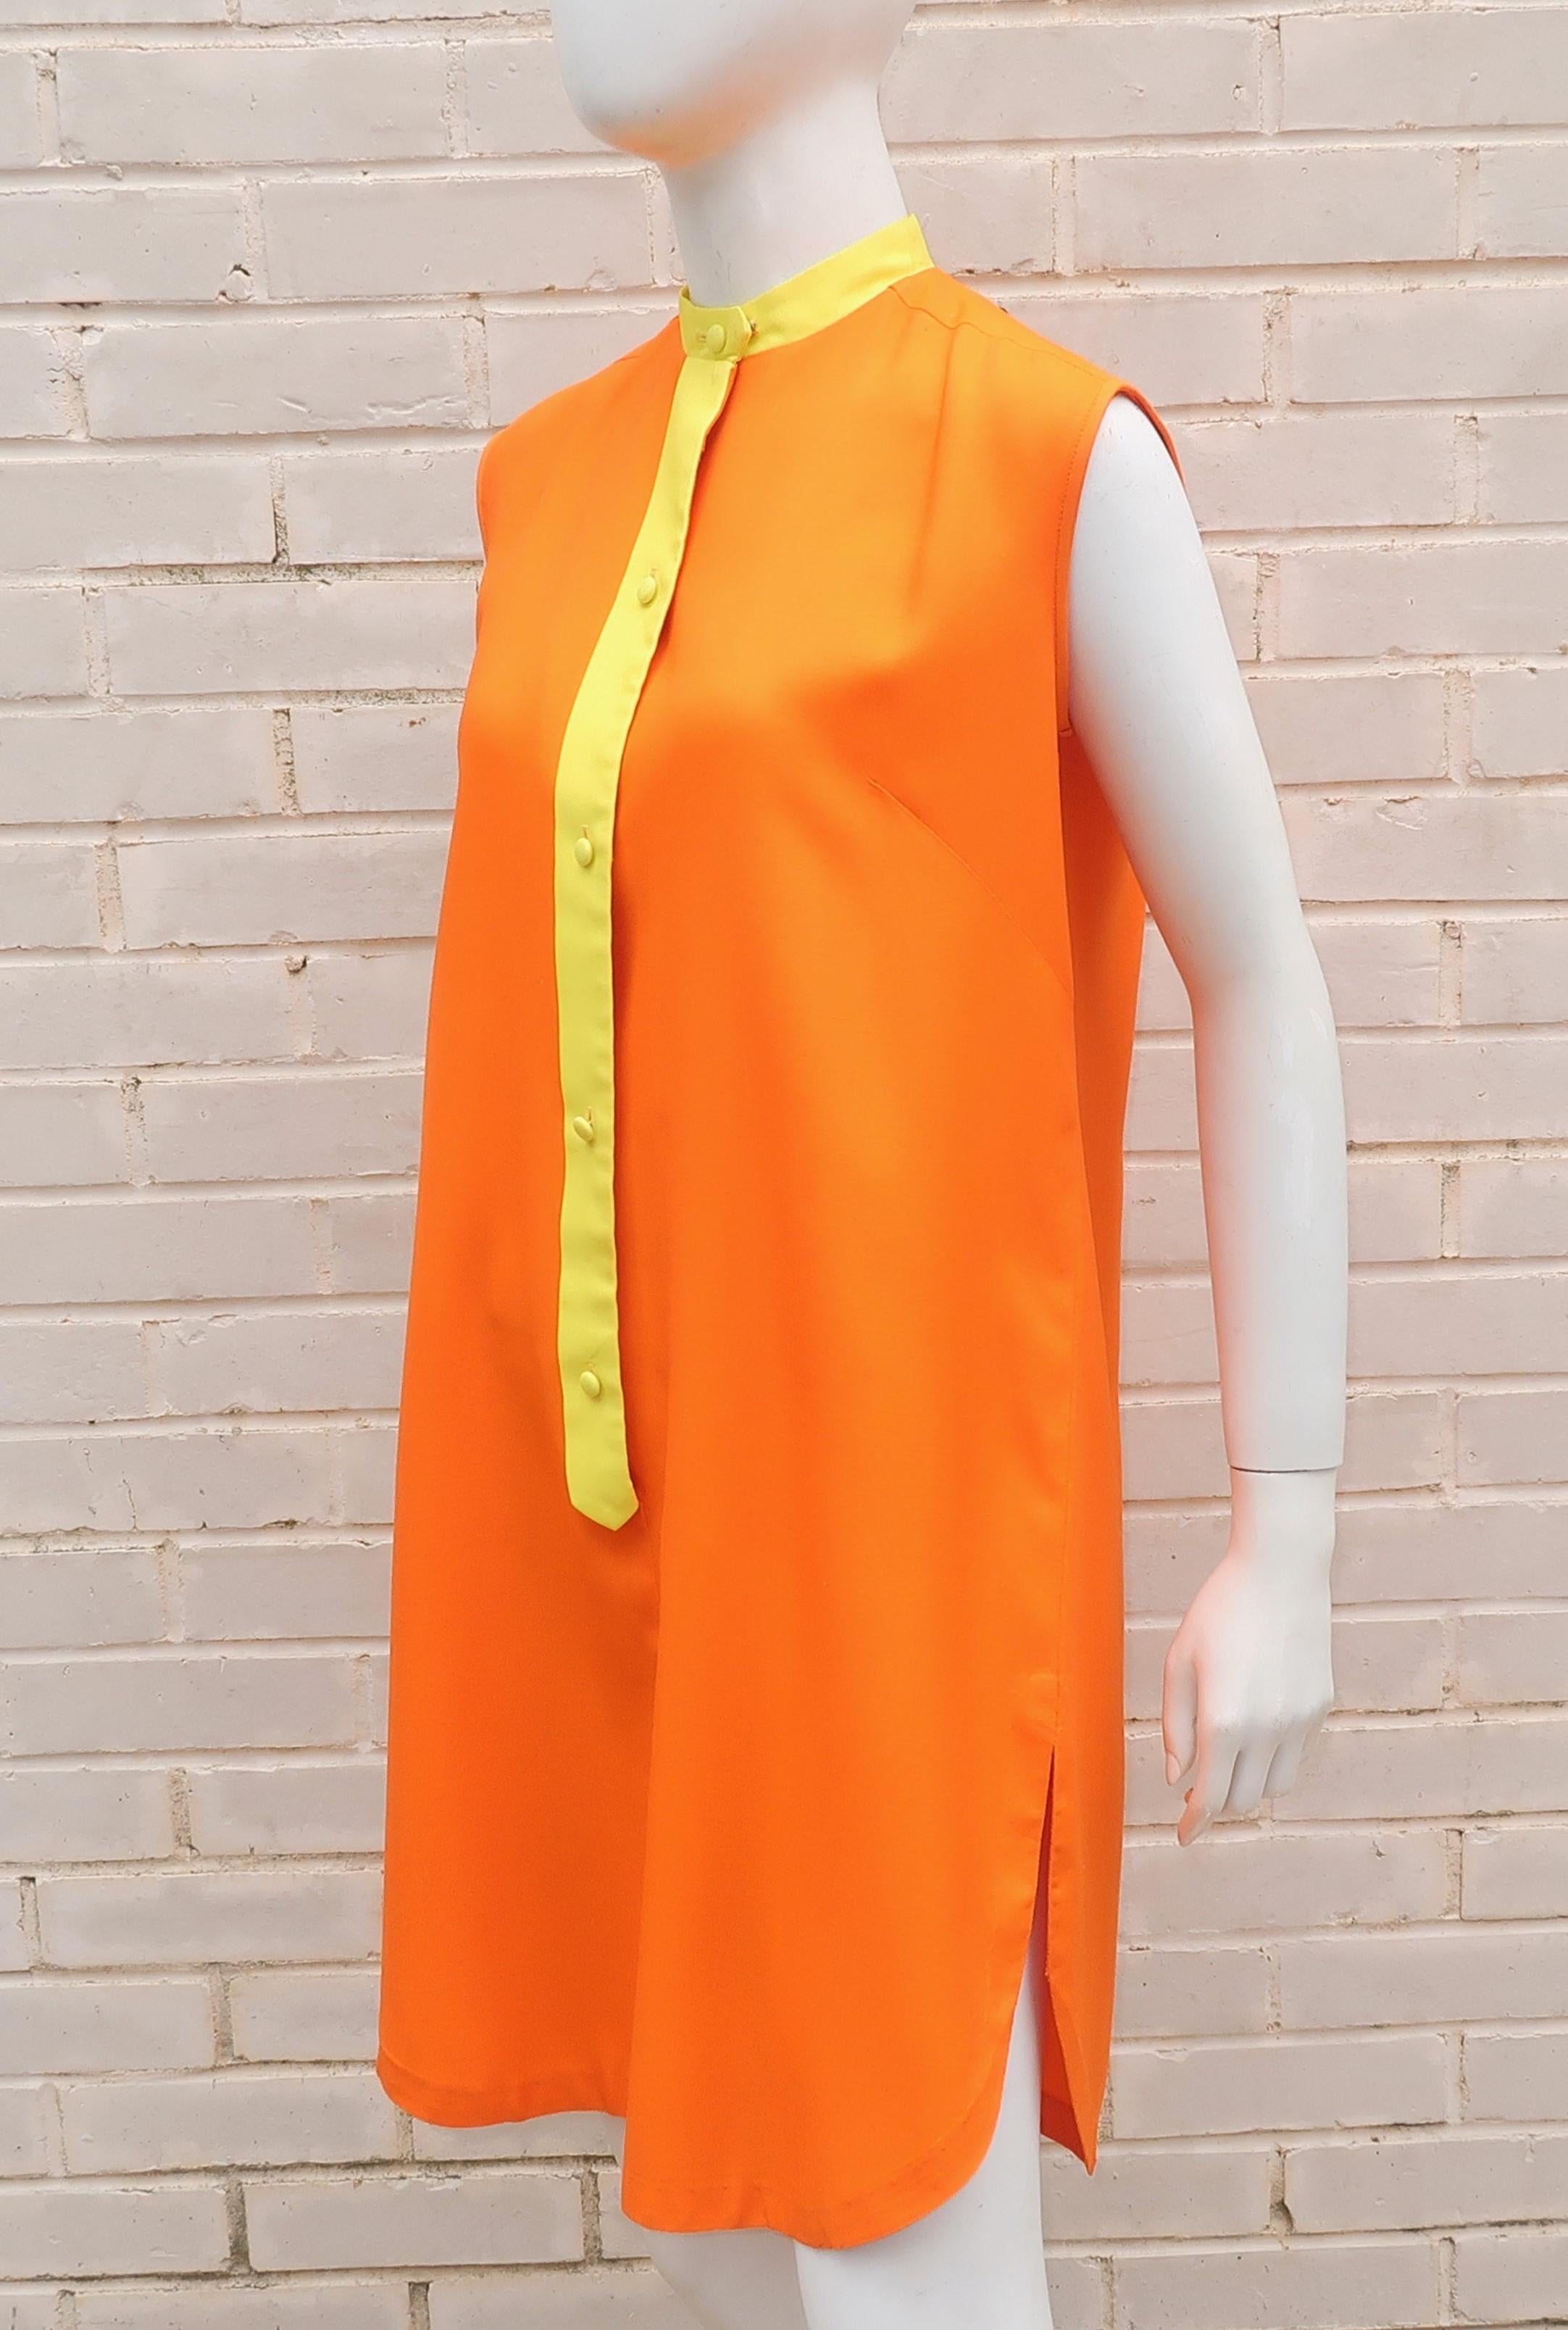 Women's Saks Fifth Avenue Orange & Yellow Cotton Blend Shift Dress, 1960's